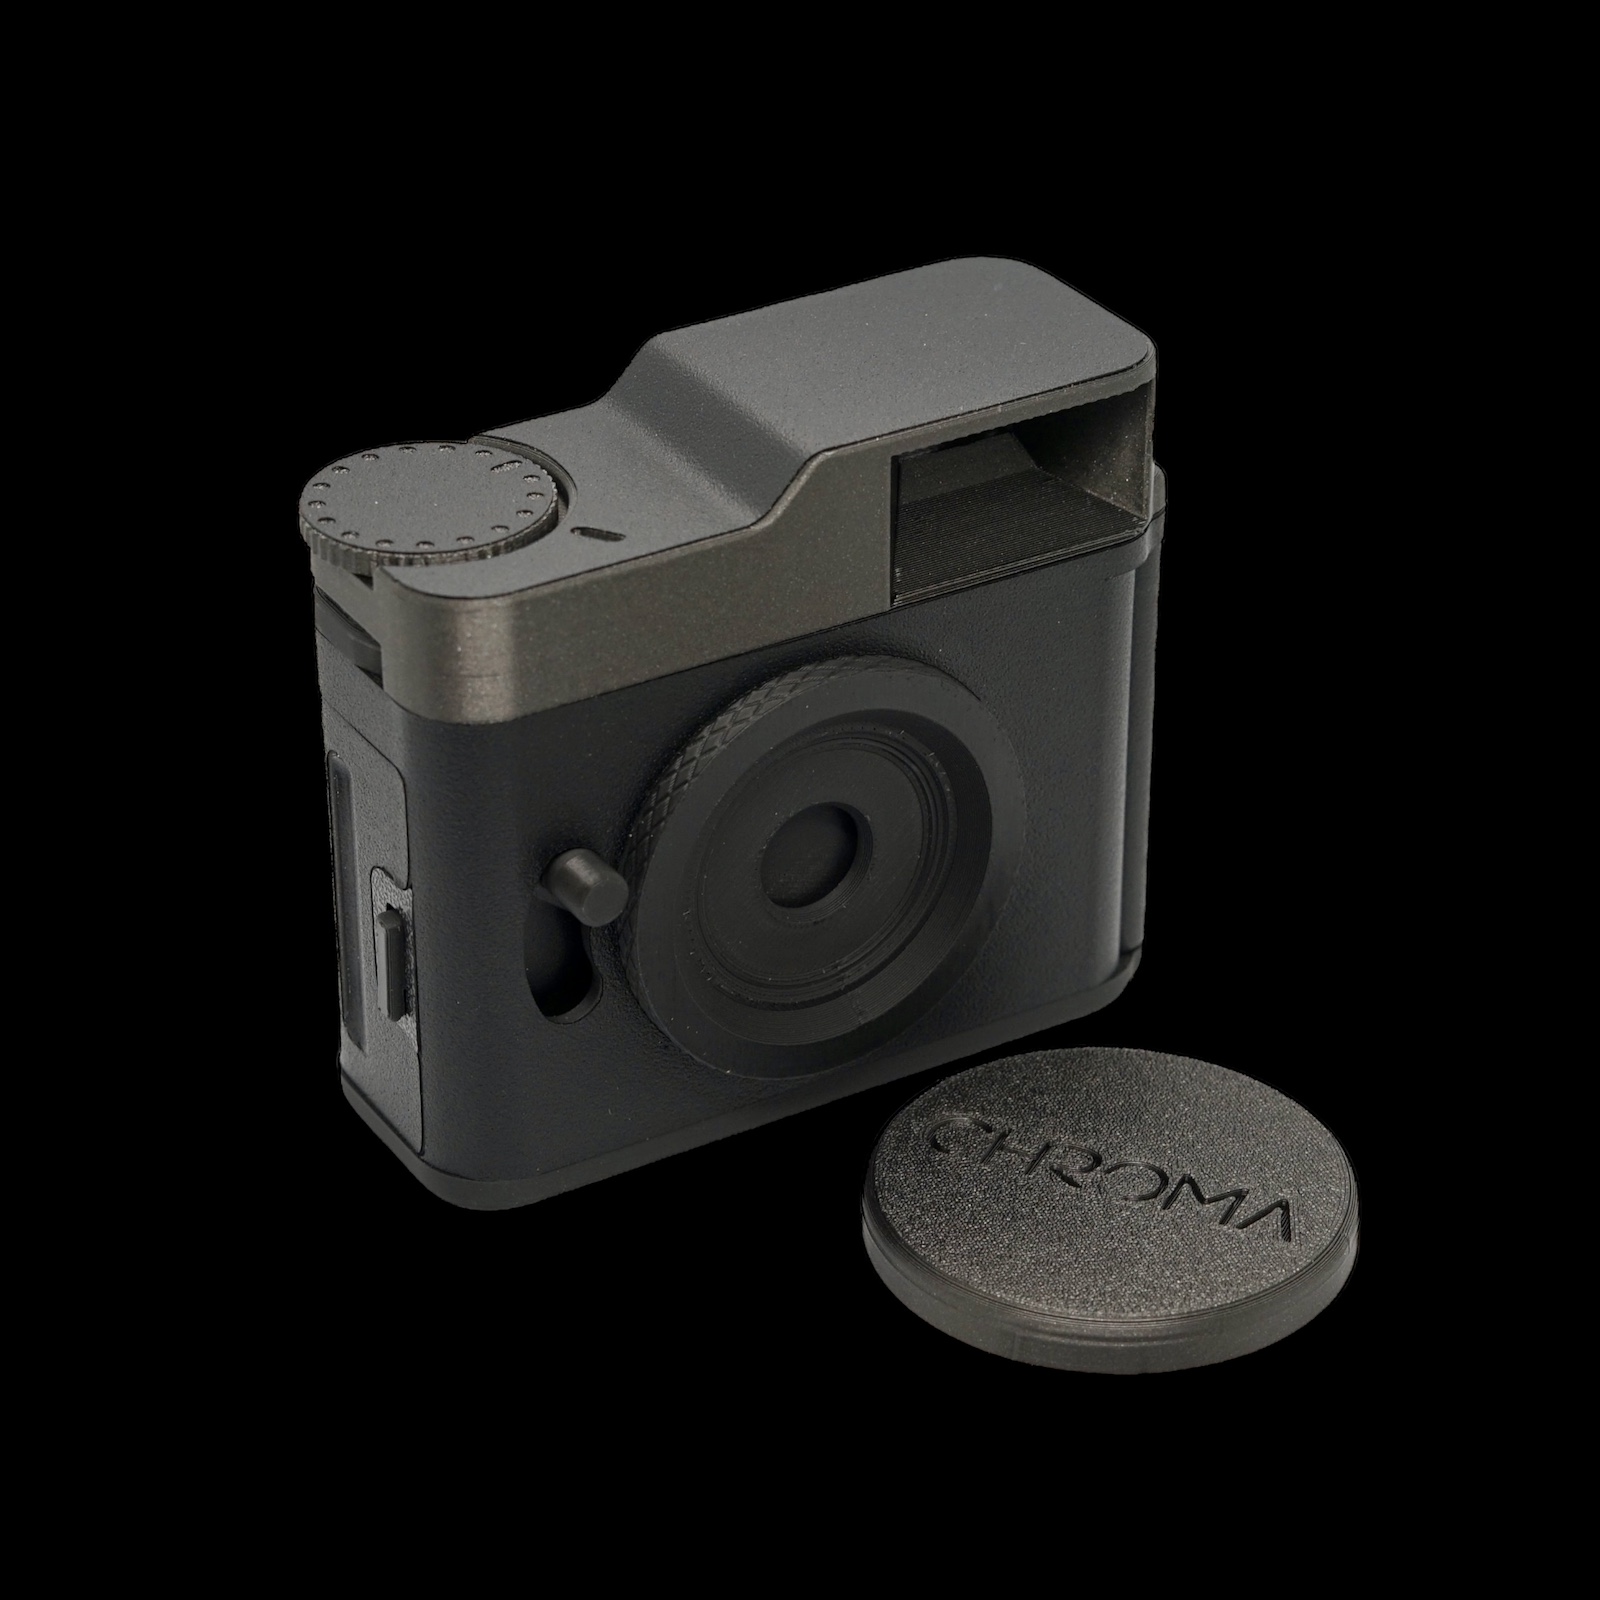 Chroma-Click-35mm-compact-film-camera-3.jpg